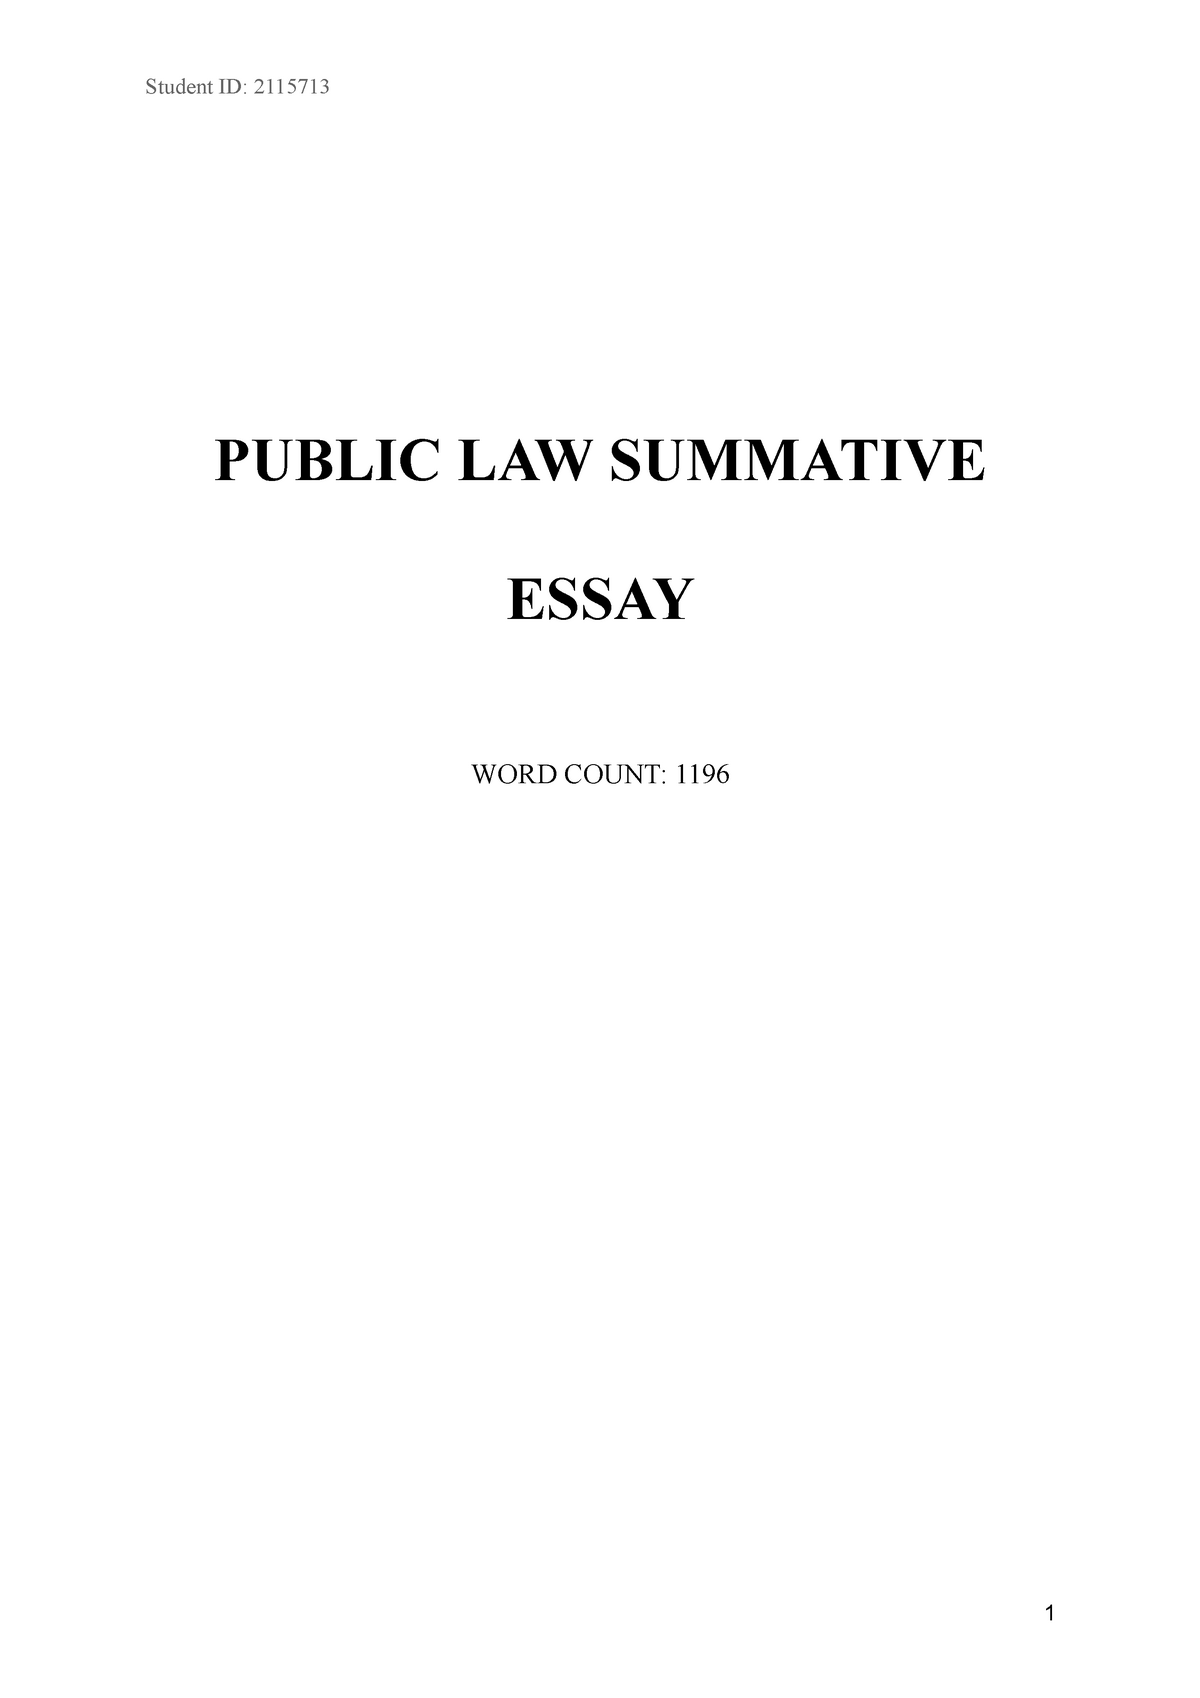 summative essay paper